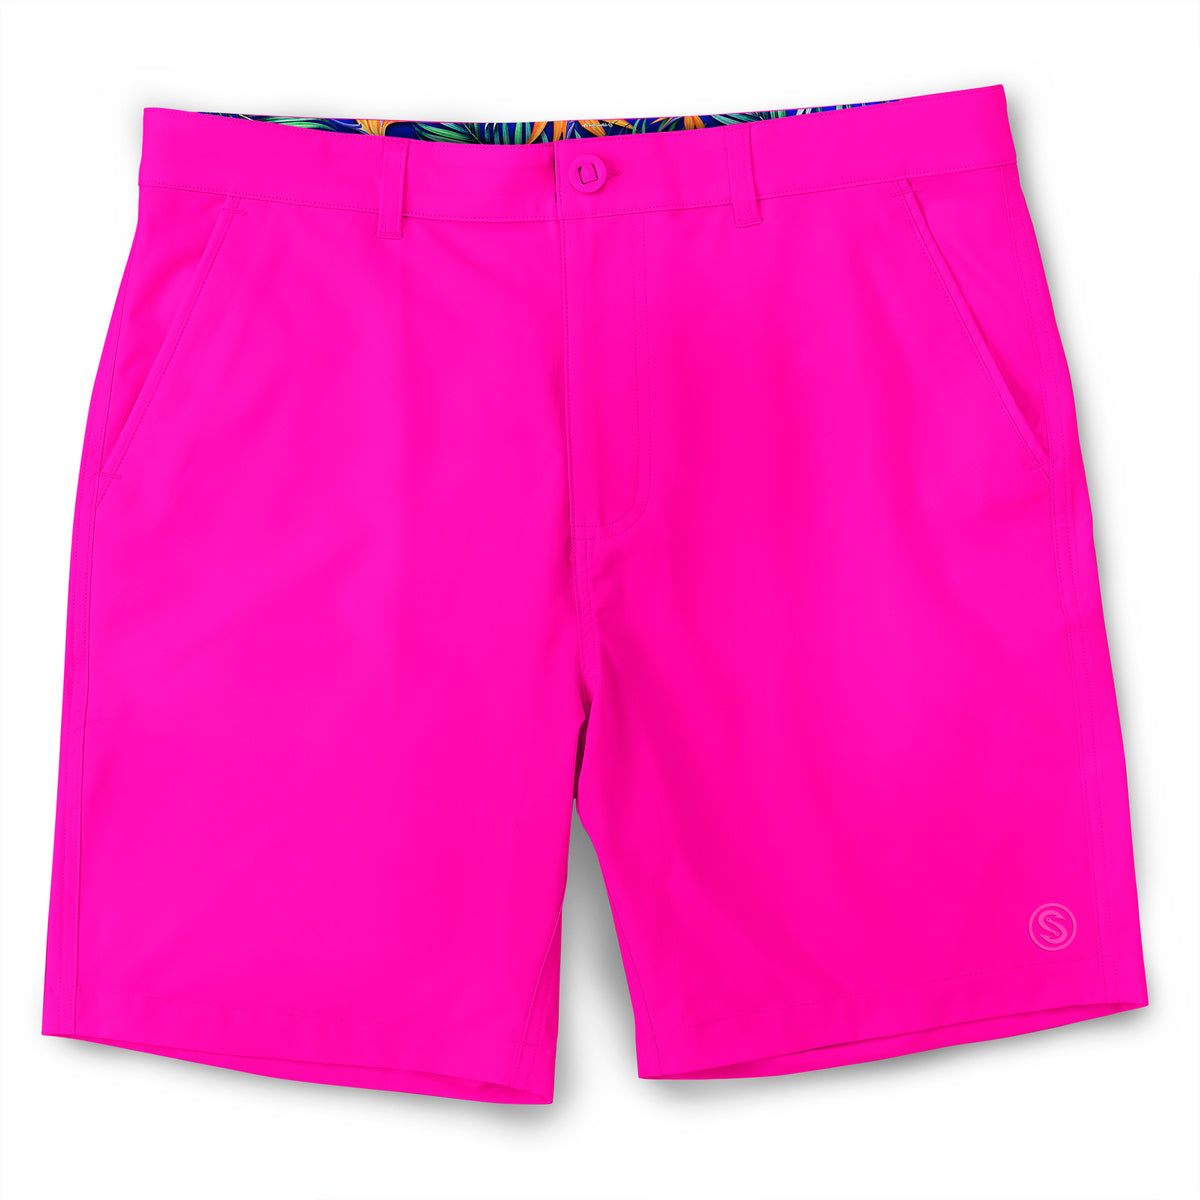 All Tides Walkshorts (Seasonal Colors) - Hot Pink / 30